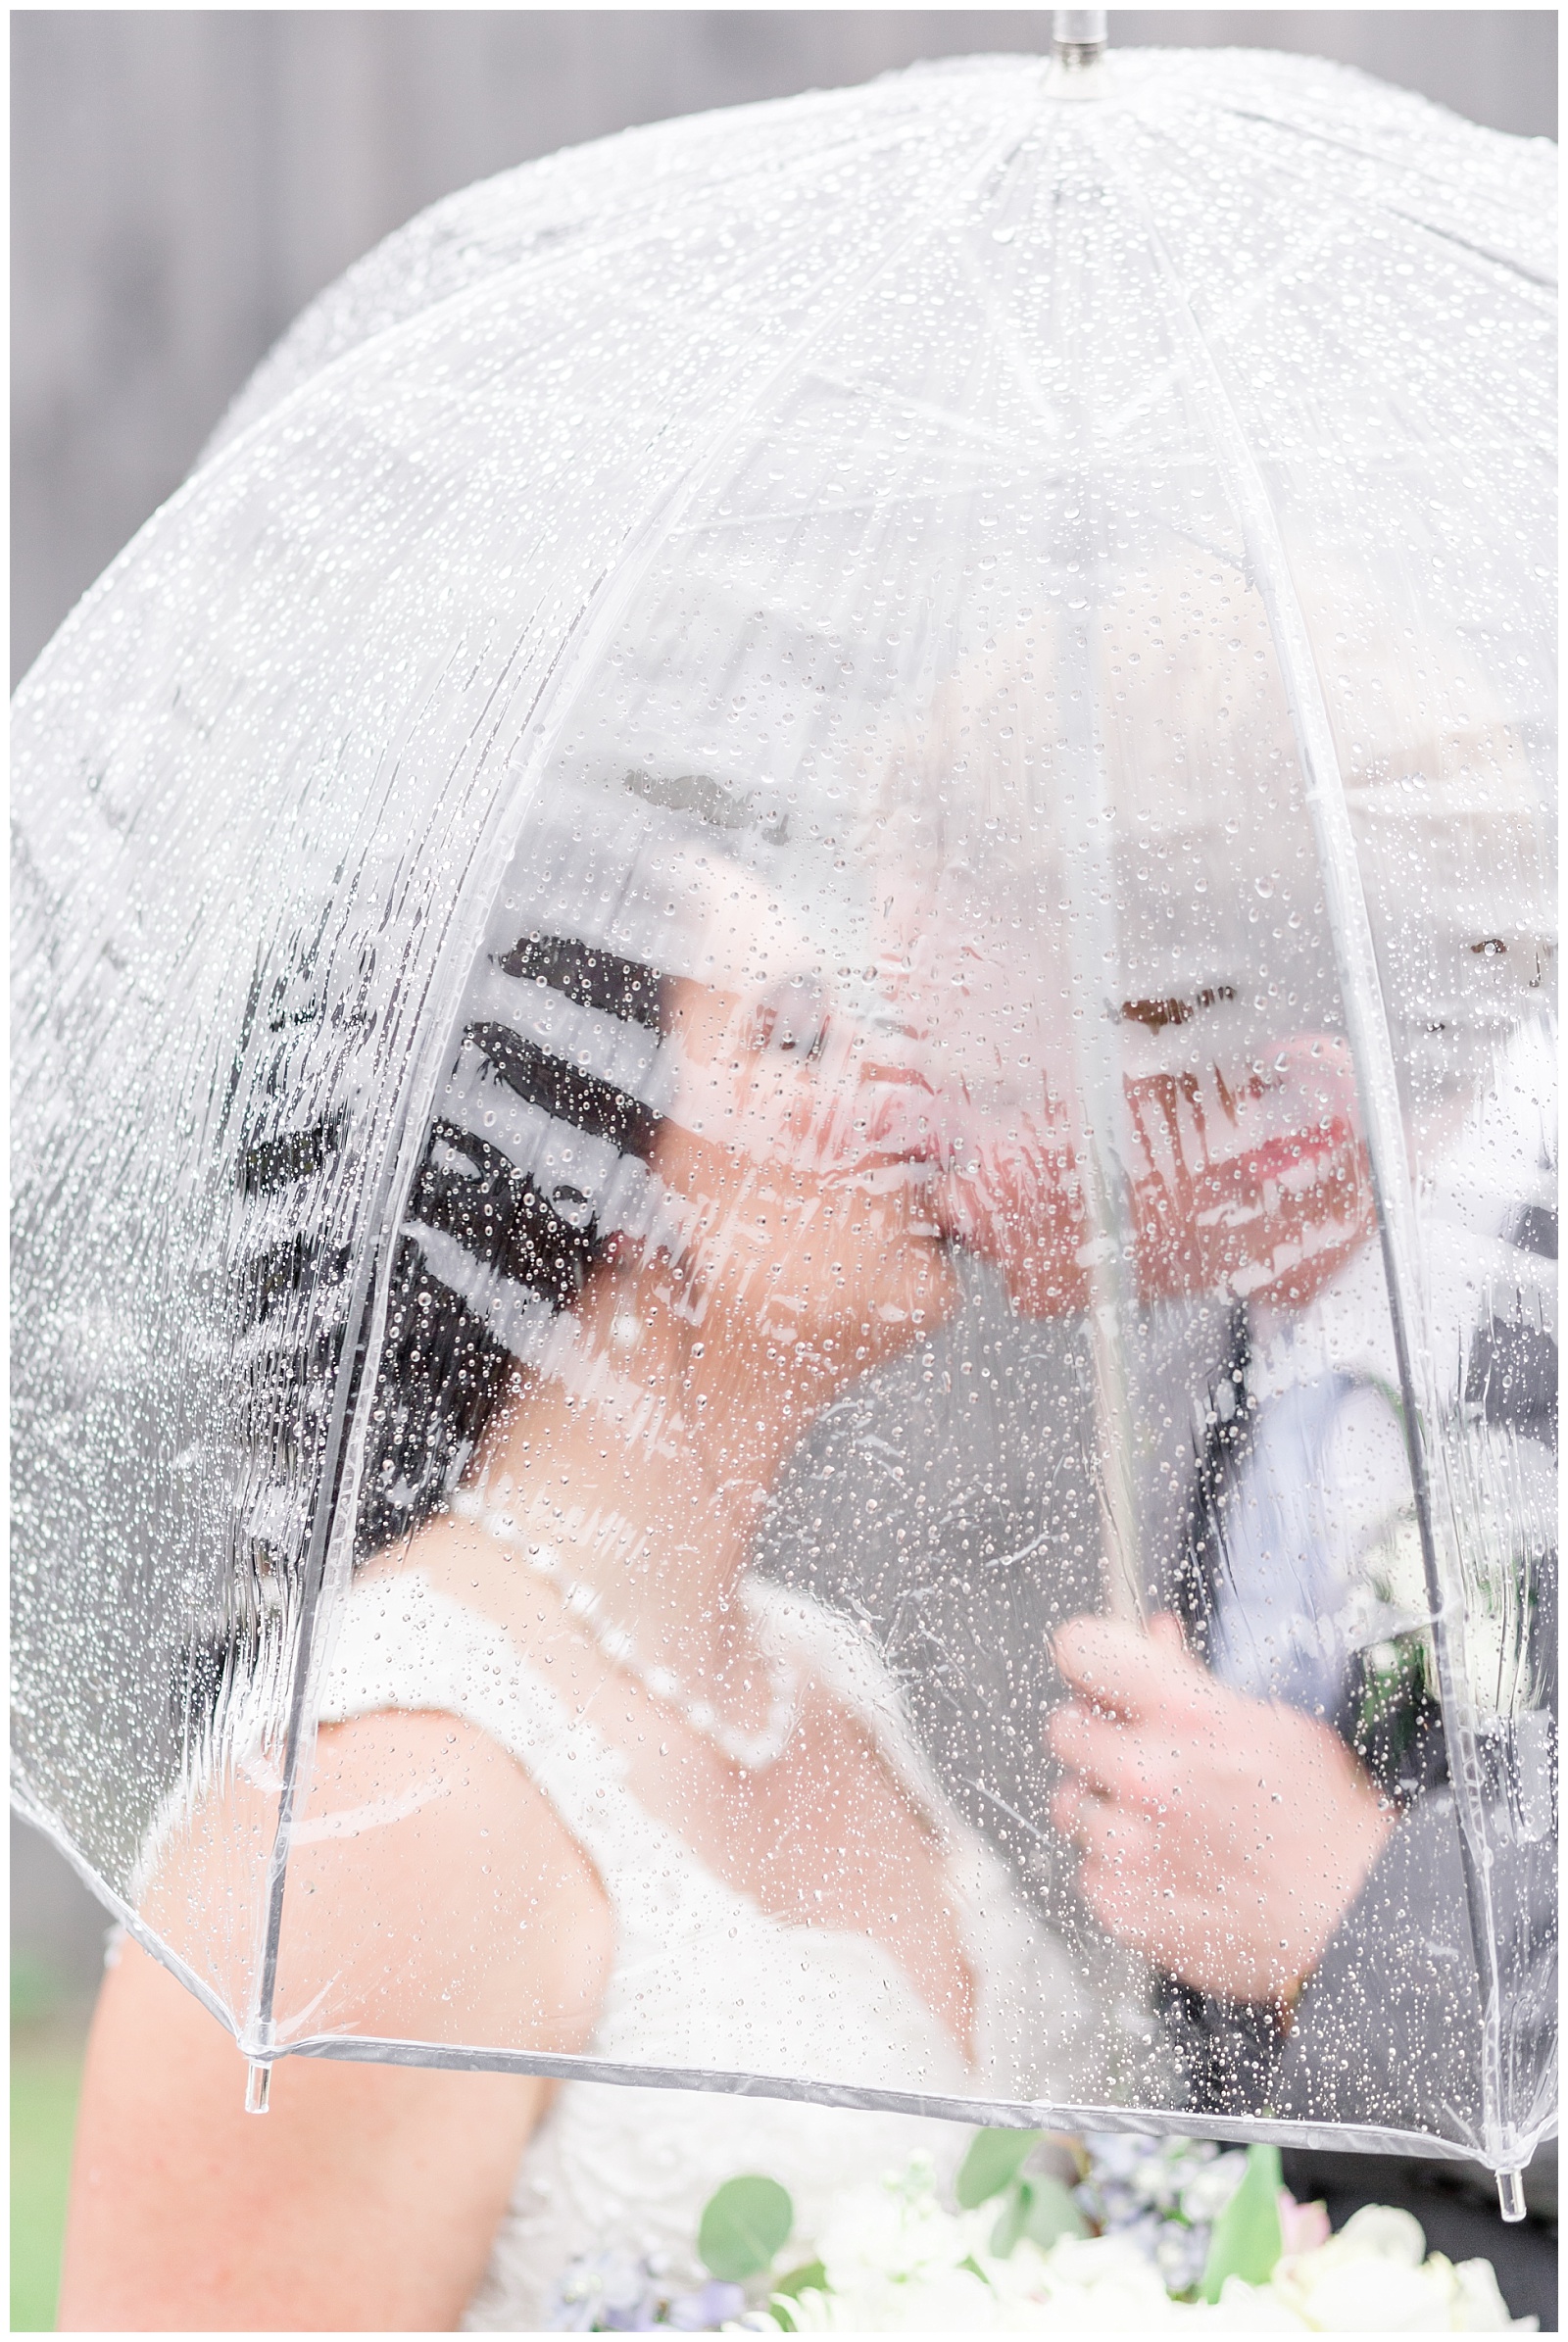 Rustic Barn Wedding Kissing Picture in rain with bubble umbrellas